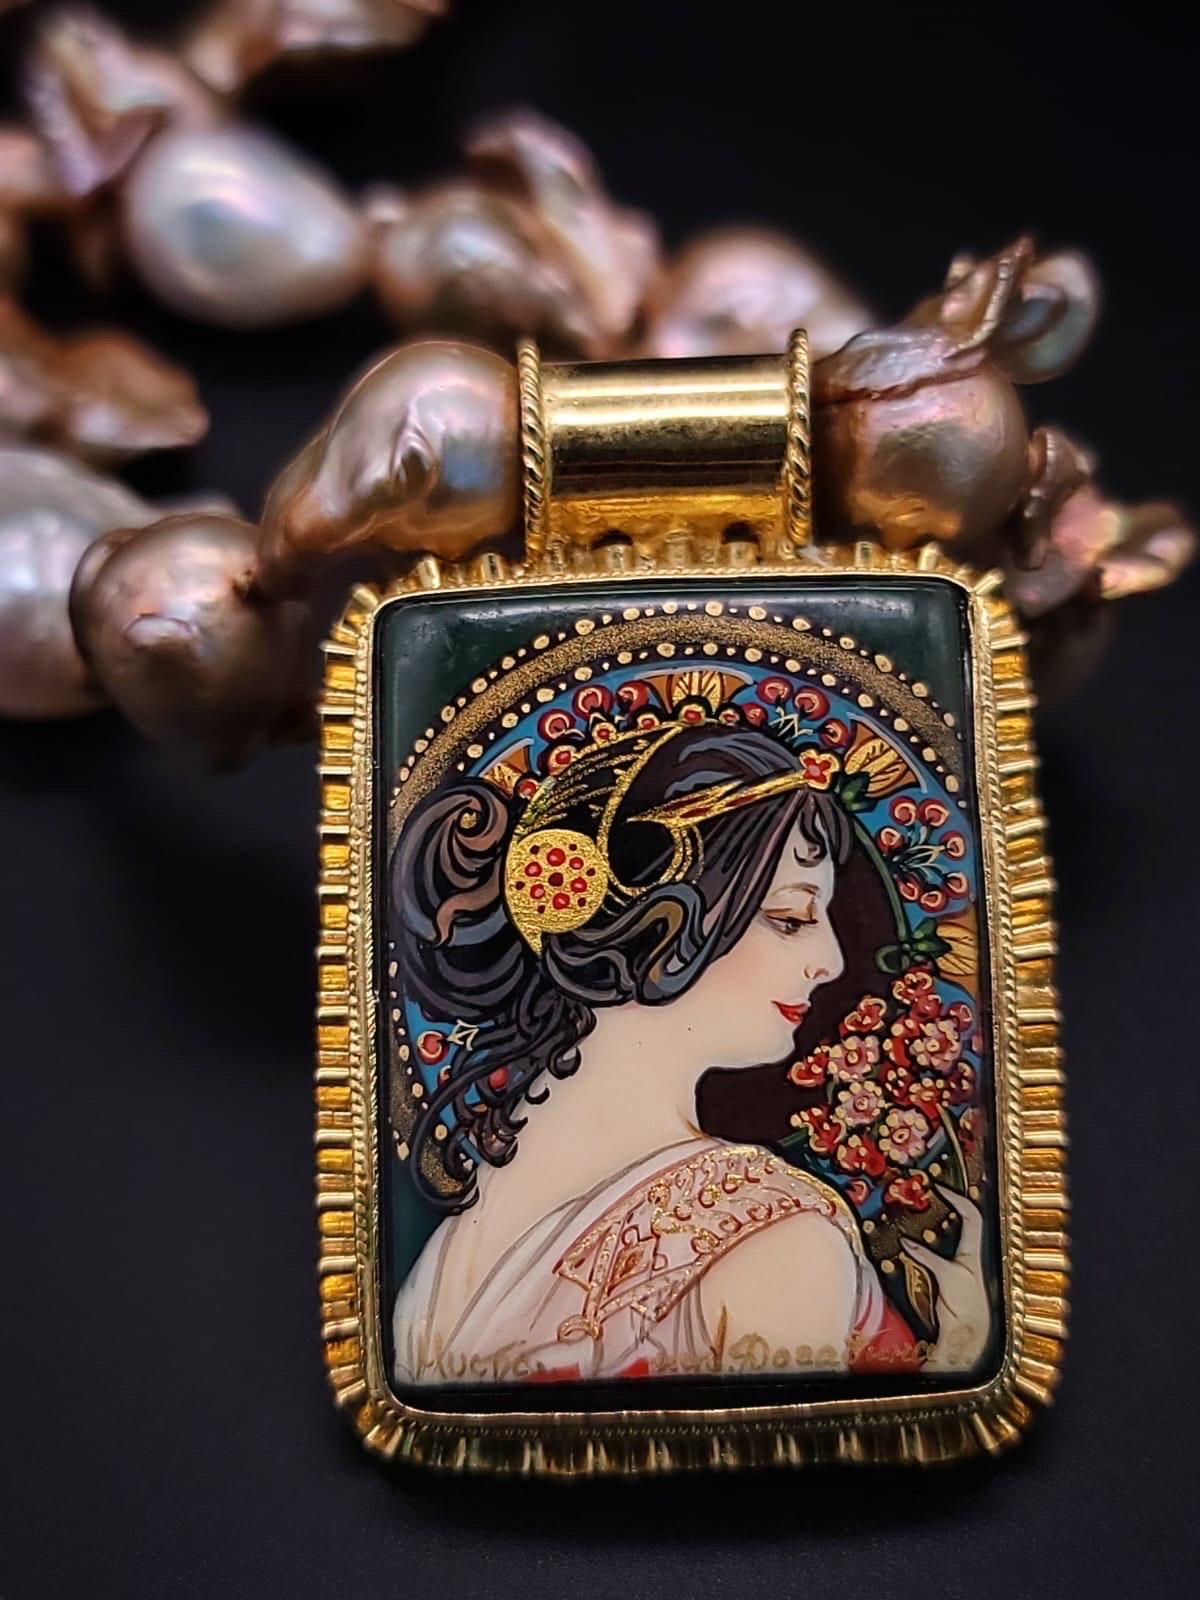 Mixed Cut A.Jeschel Glamorous Baroque Pearl with an Art Deco miniature pendant.